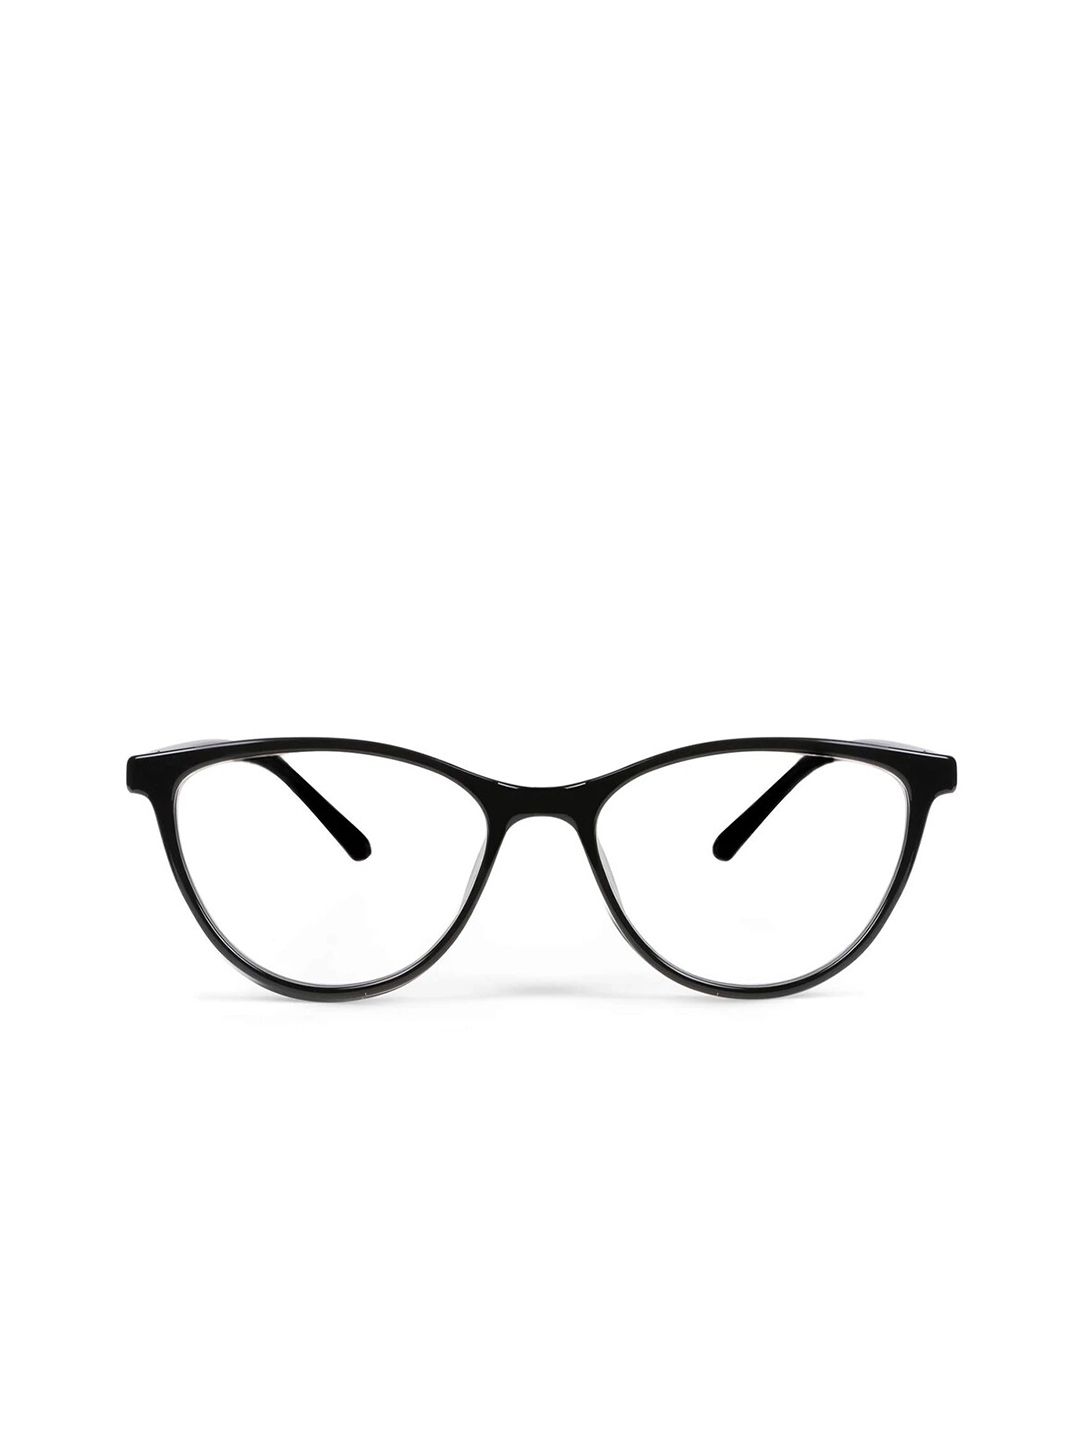 Intellilens Unisex Black Full Rim Cateye Frame with Blue Cut Anti Glare Computer Glasses Price in India